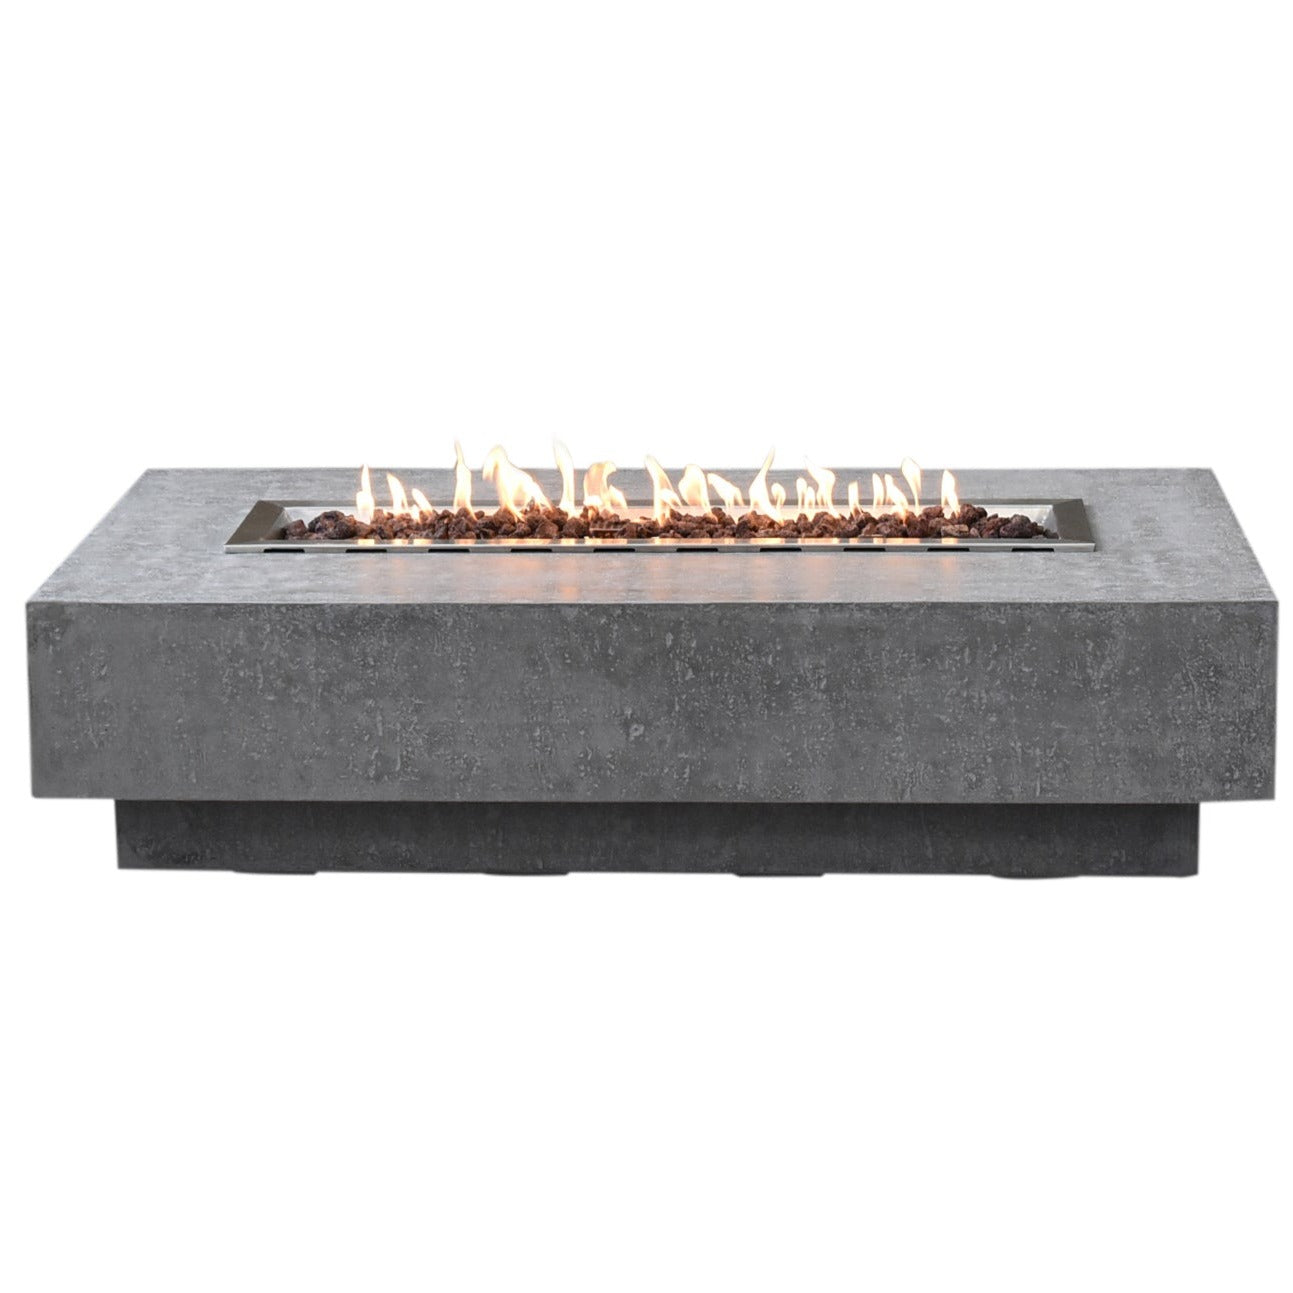 Elementi Hampton Fire Pit Table in Light Gray lit